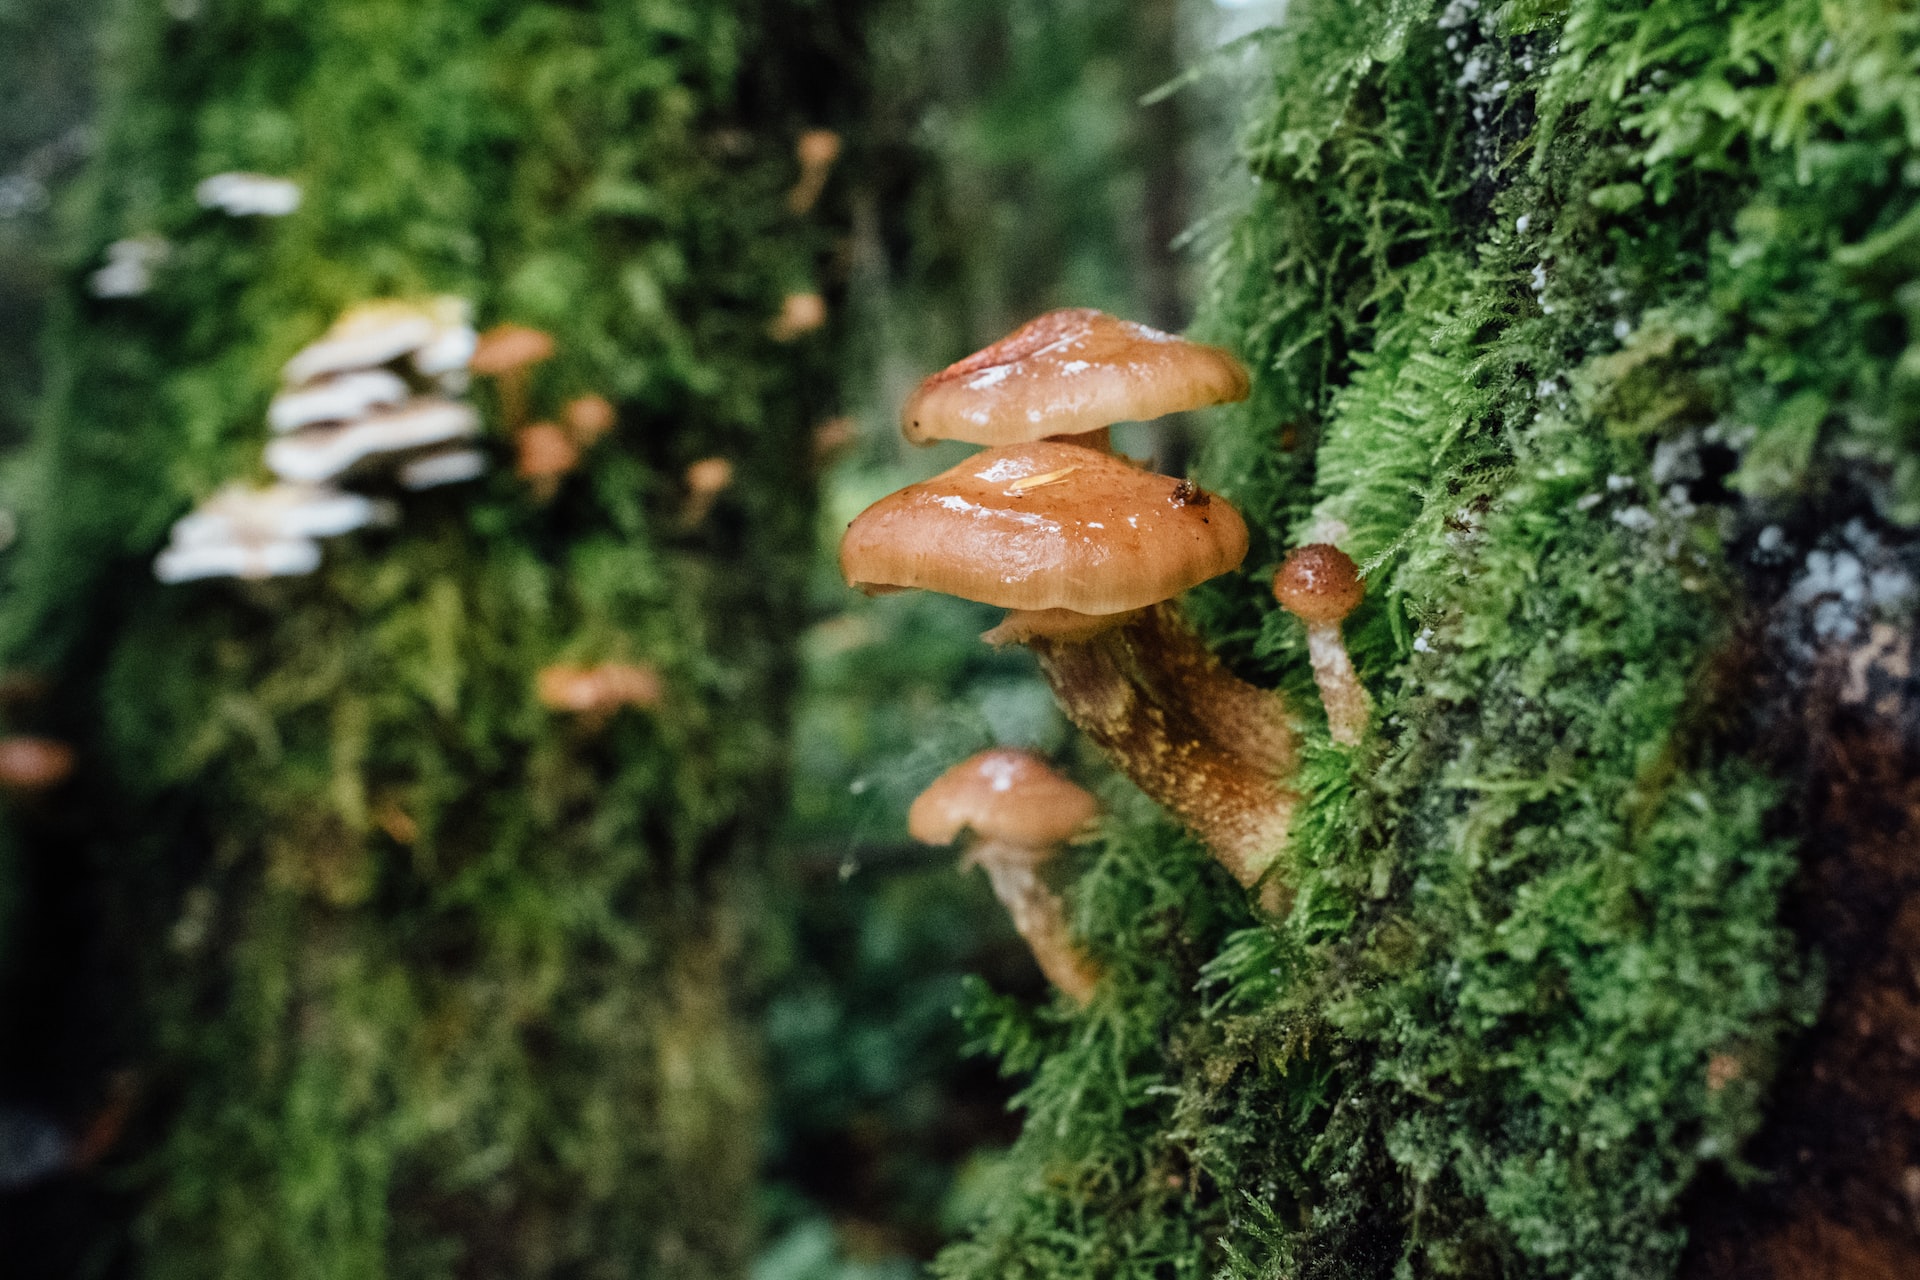 Fungi growing on mossy tree. Credit: Jesse Bauer/Unsplash